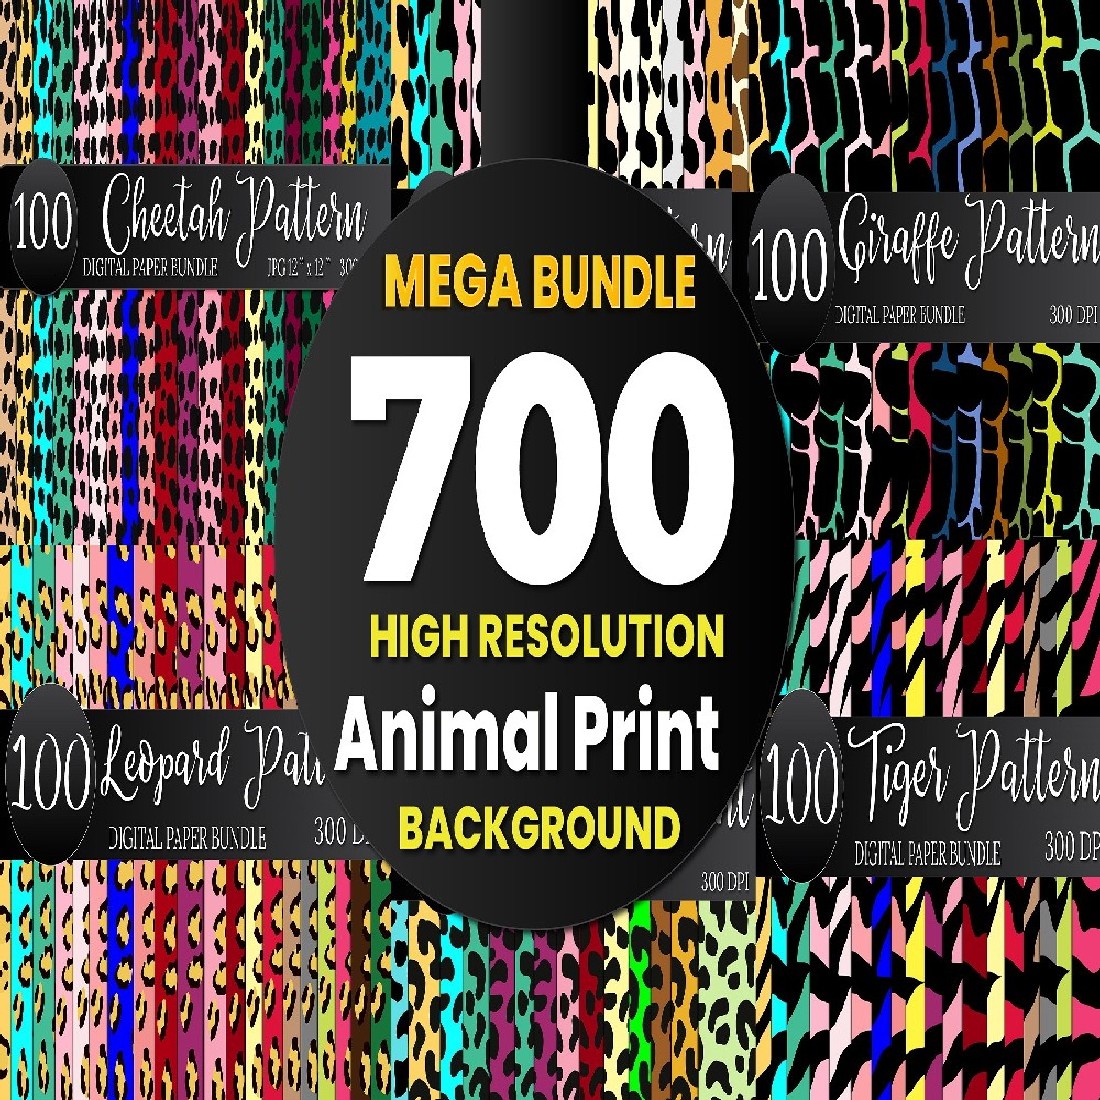 700 Mega Bundle Animal Print Background pinterest image.